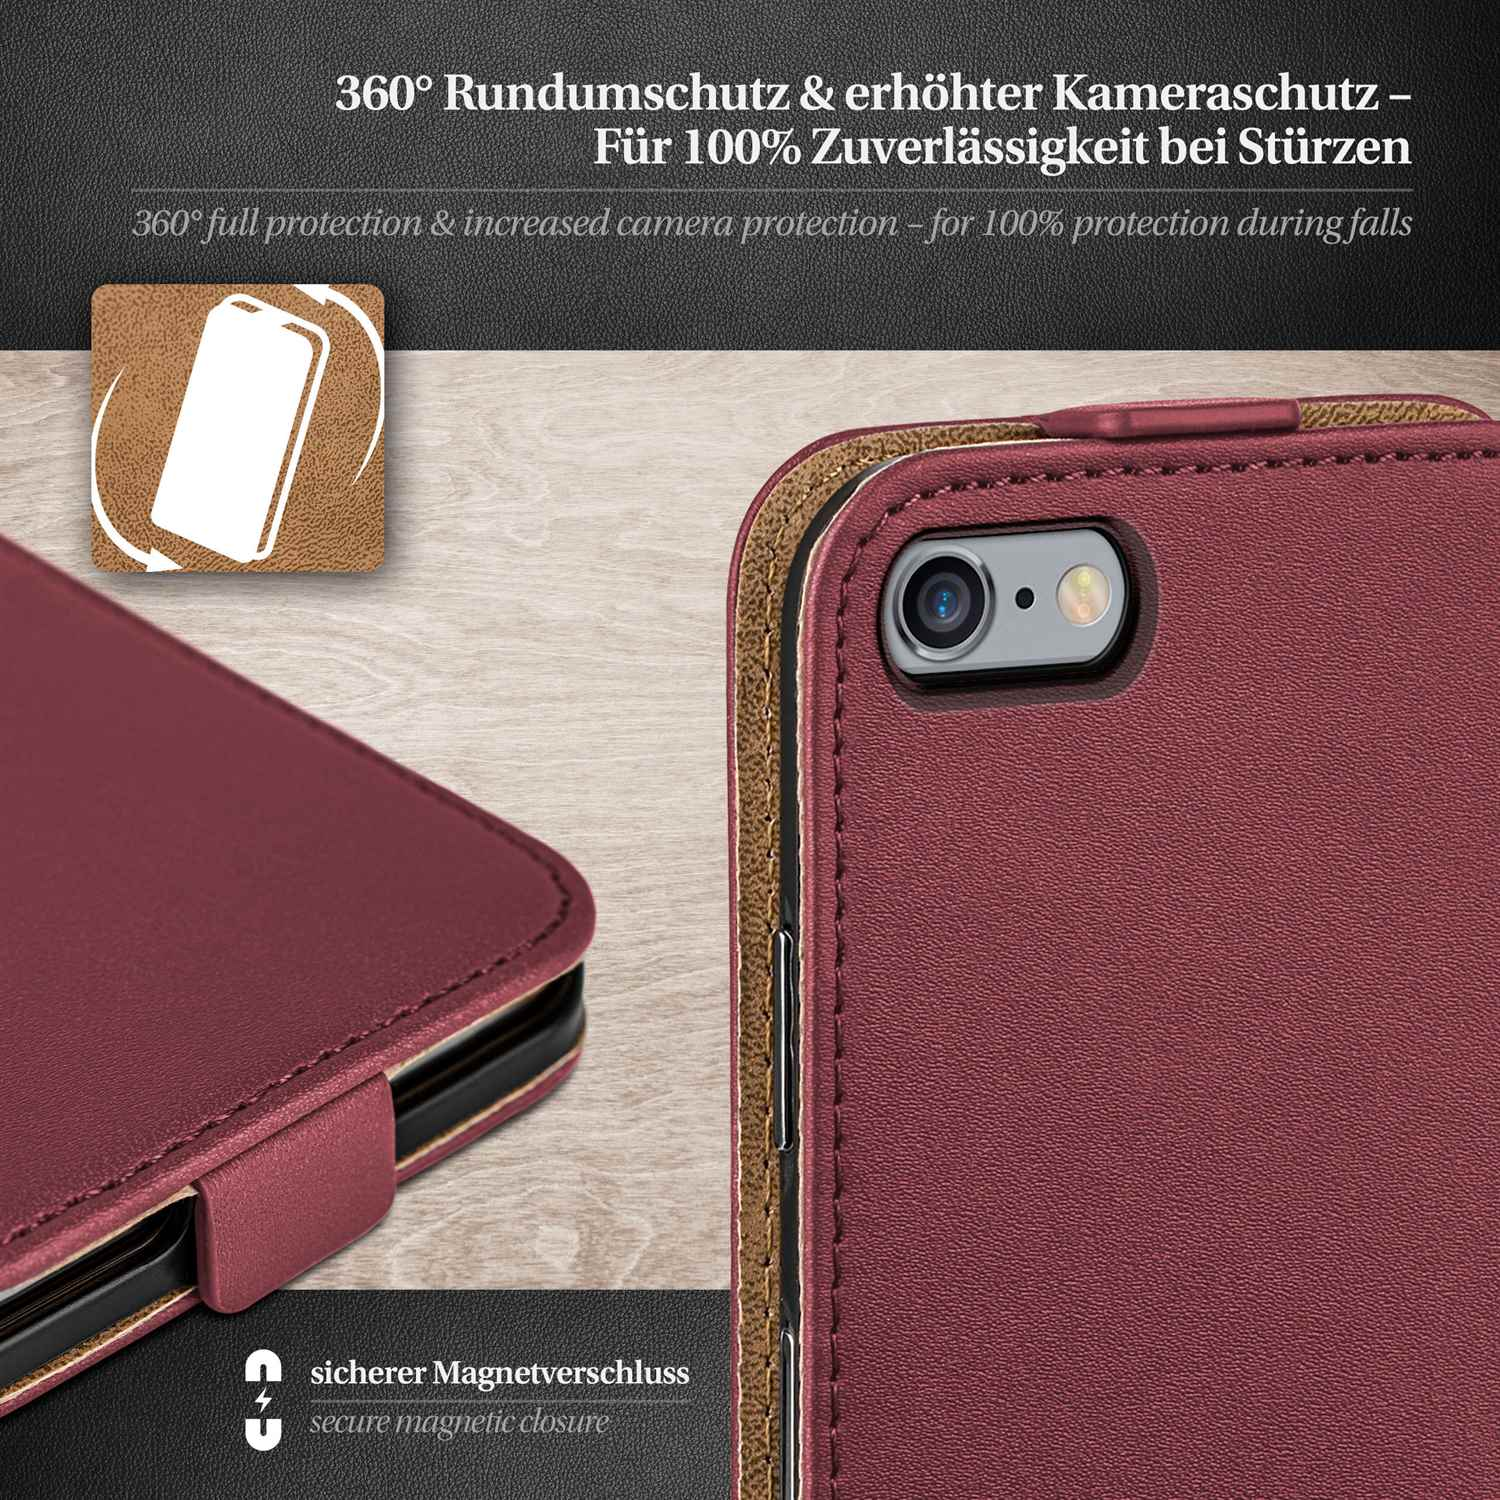 MOEX Flip Case, Apple, Maroon-Red Flip iPhone Cover, 6 Plus